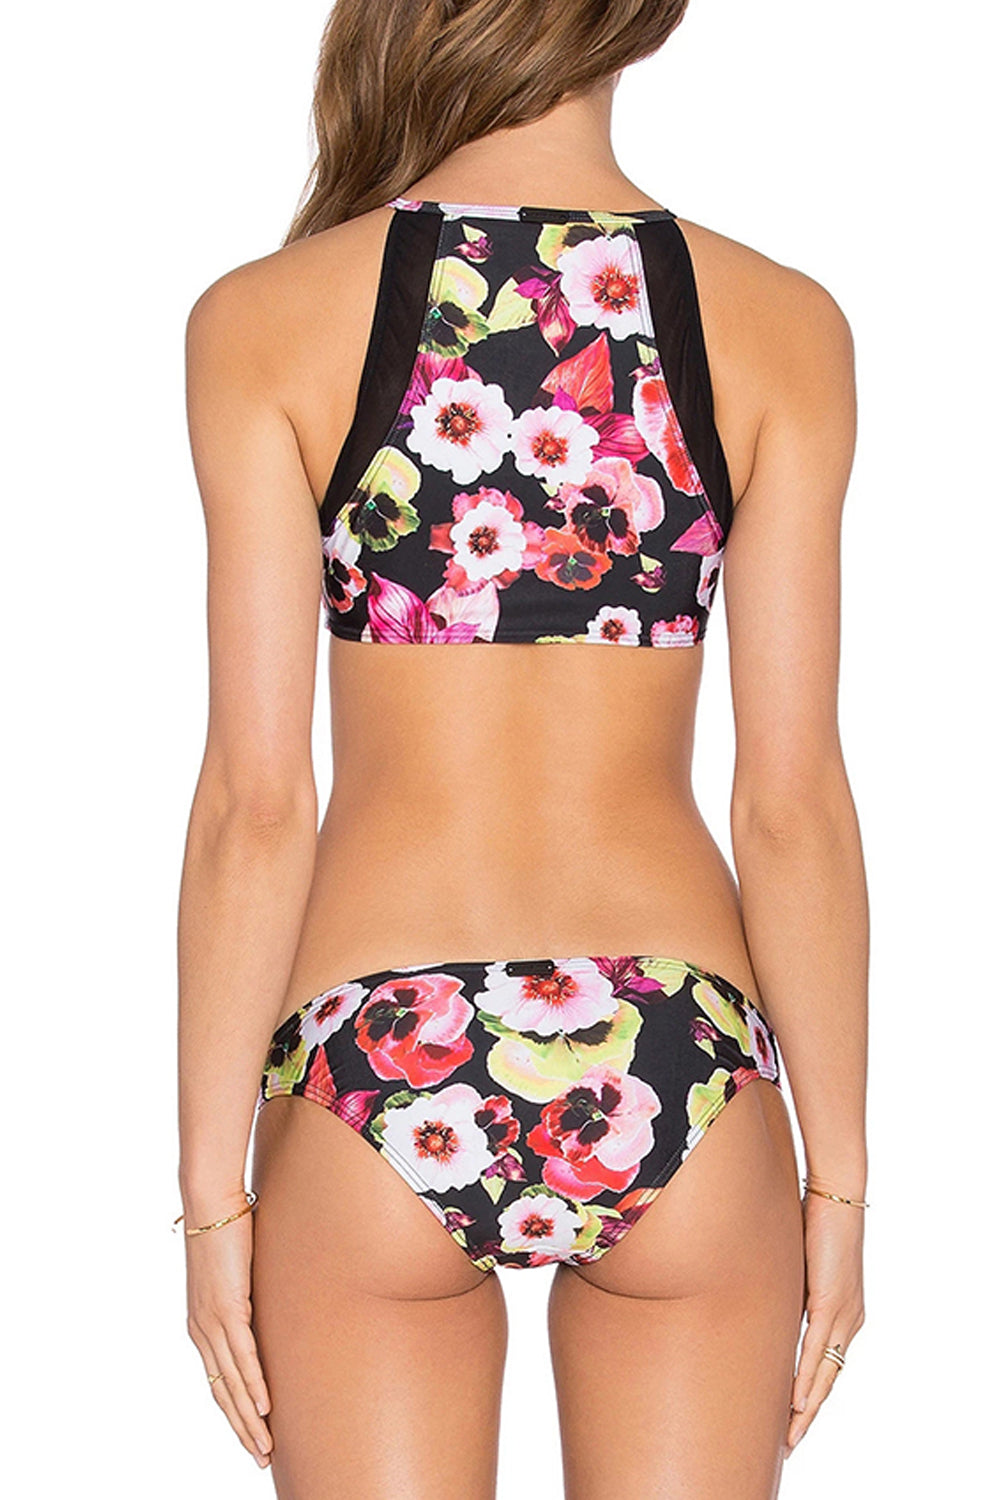 Iyasson Floral Printing Tank Top Bikini Set